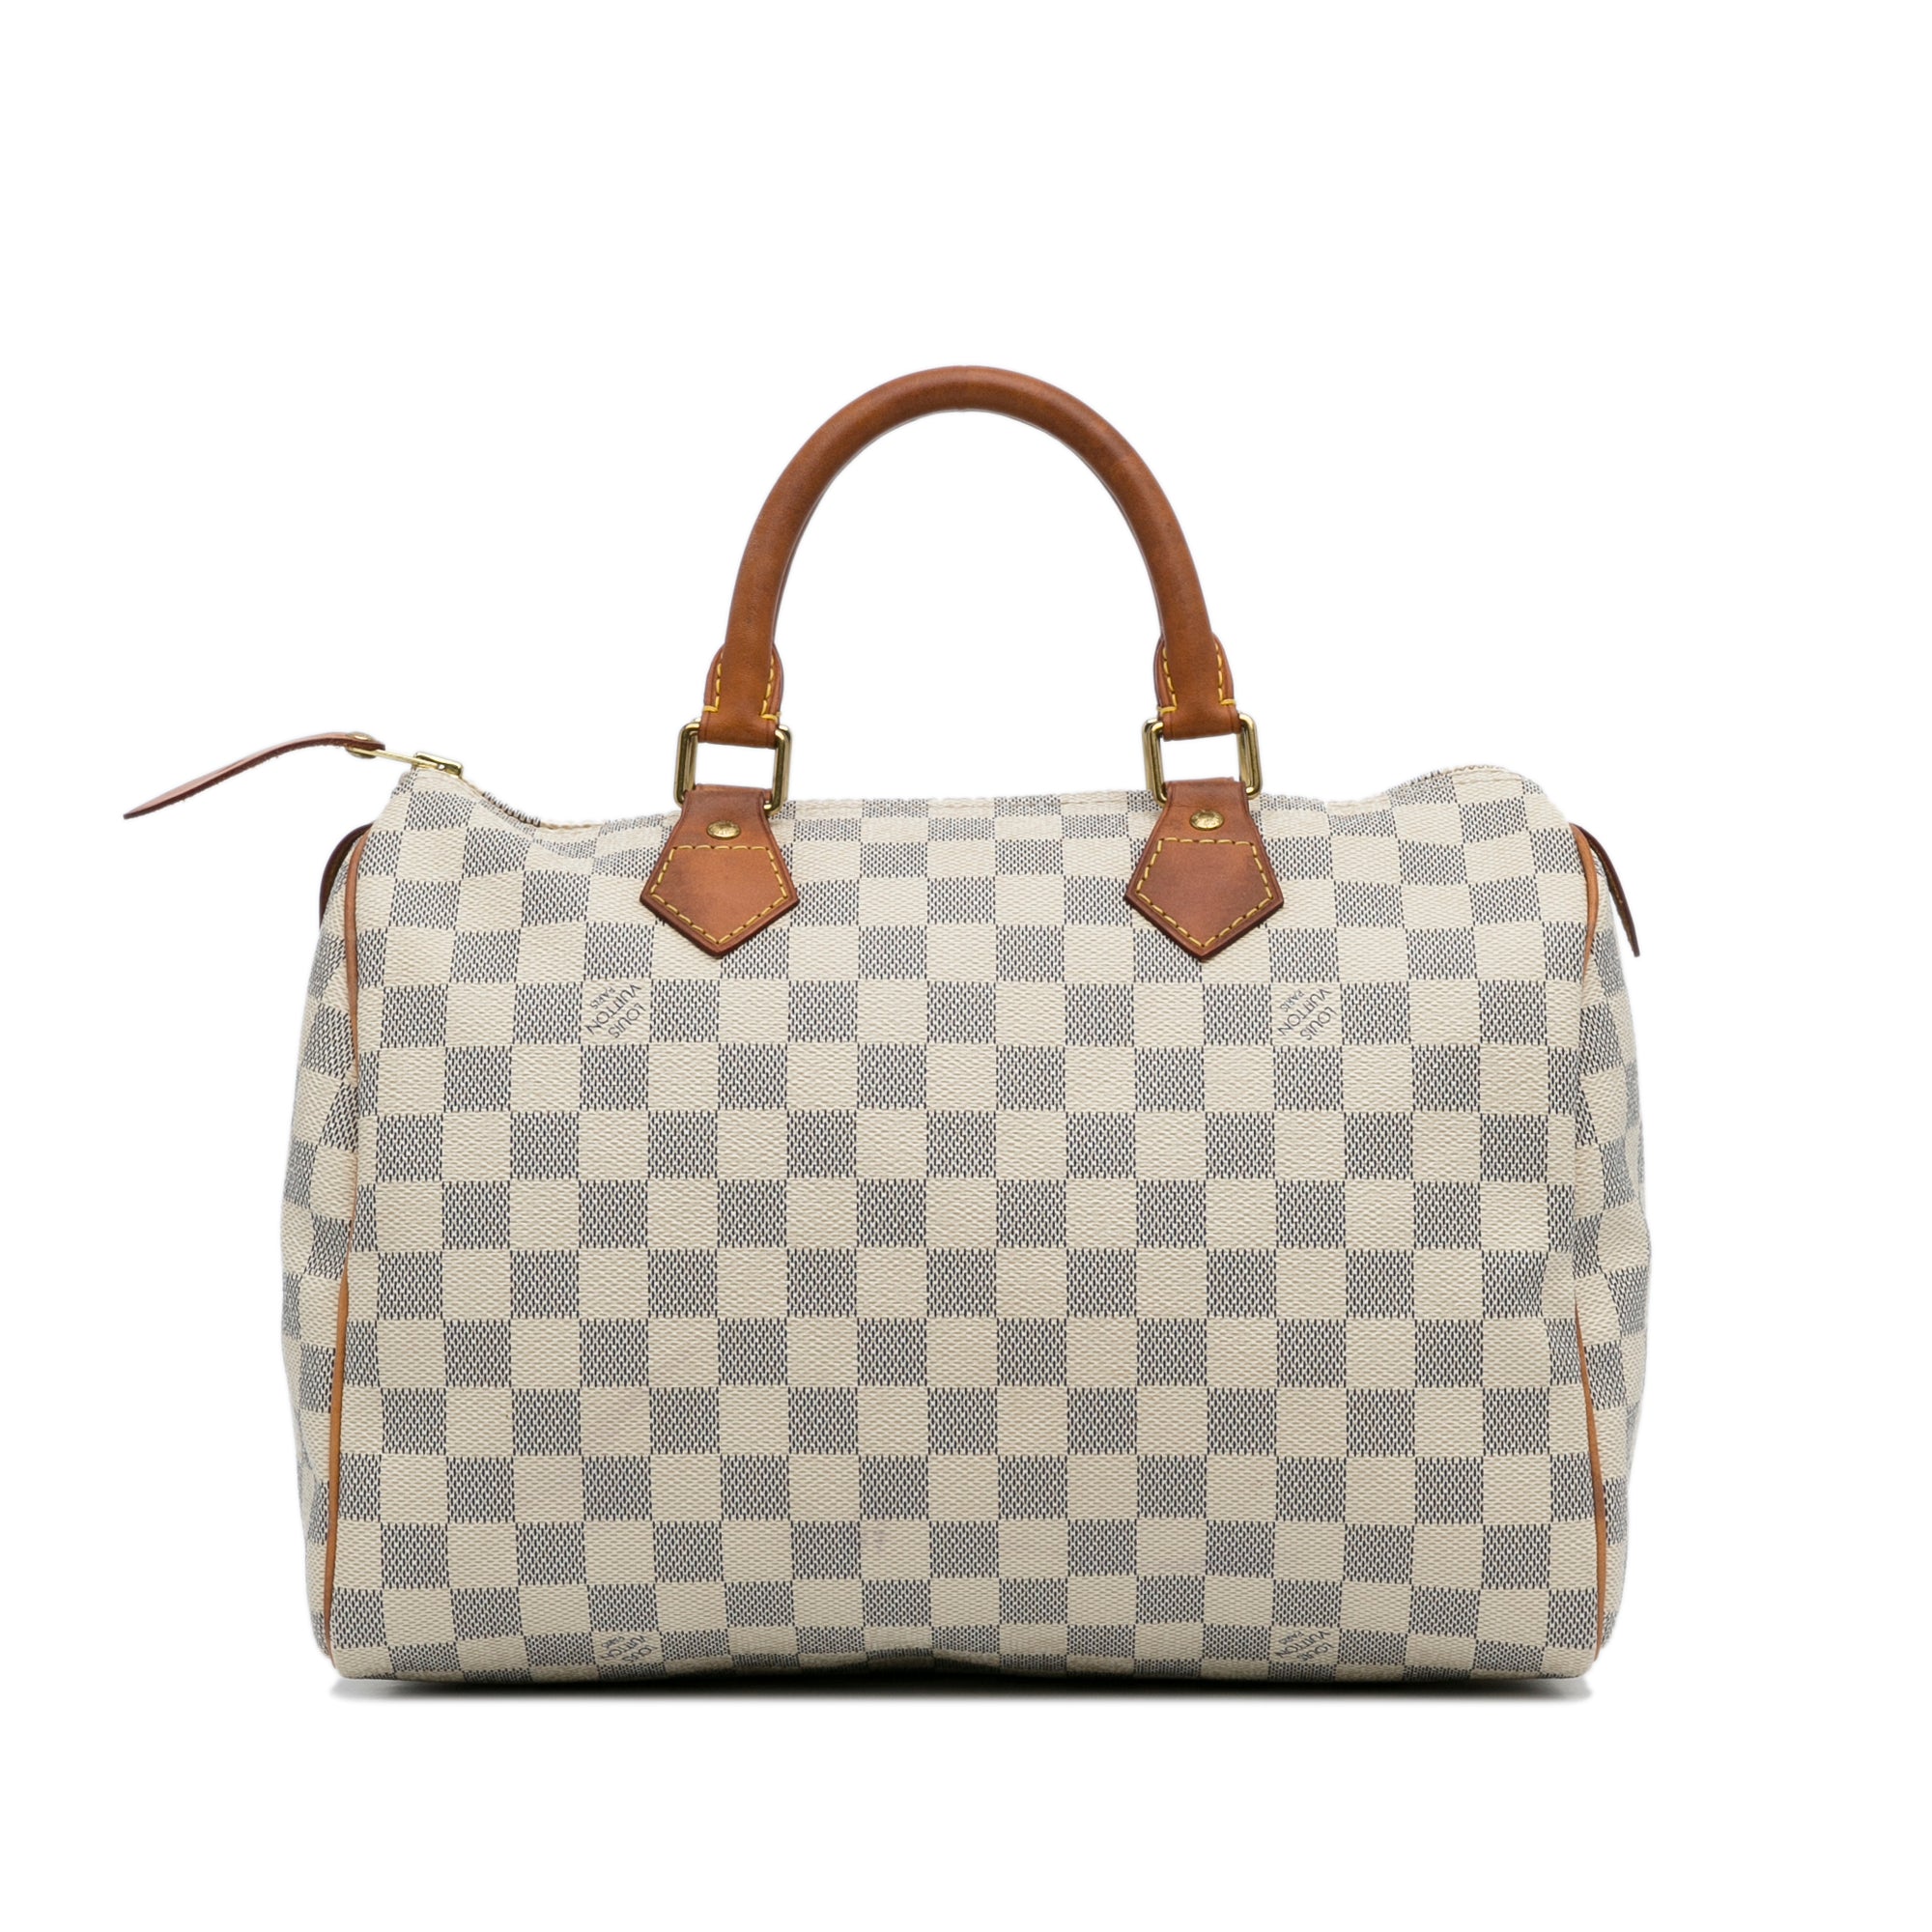 100% Authentic Louis Vuitton Speedy 30 White Damier Azur Hand Bag